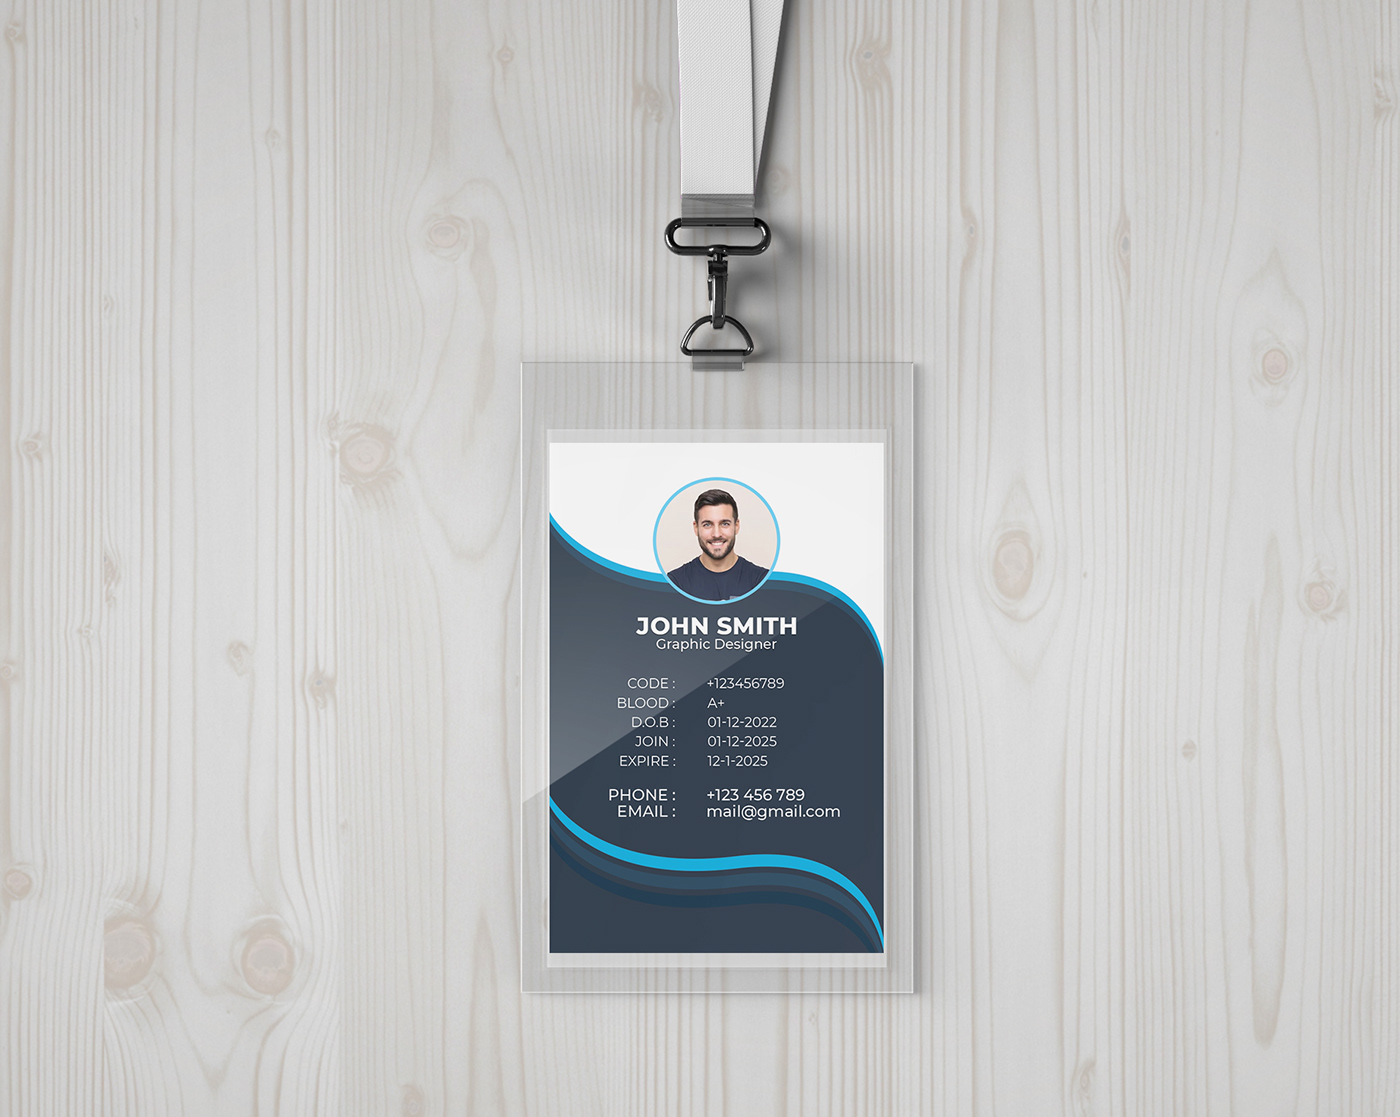 design ID card design flyer banner ads ID Card Template cards card design print brochure